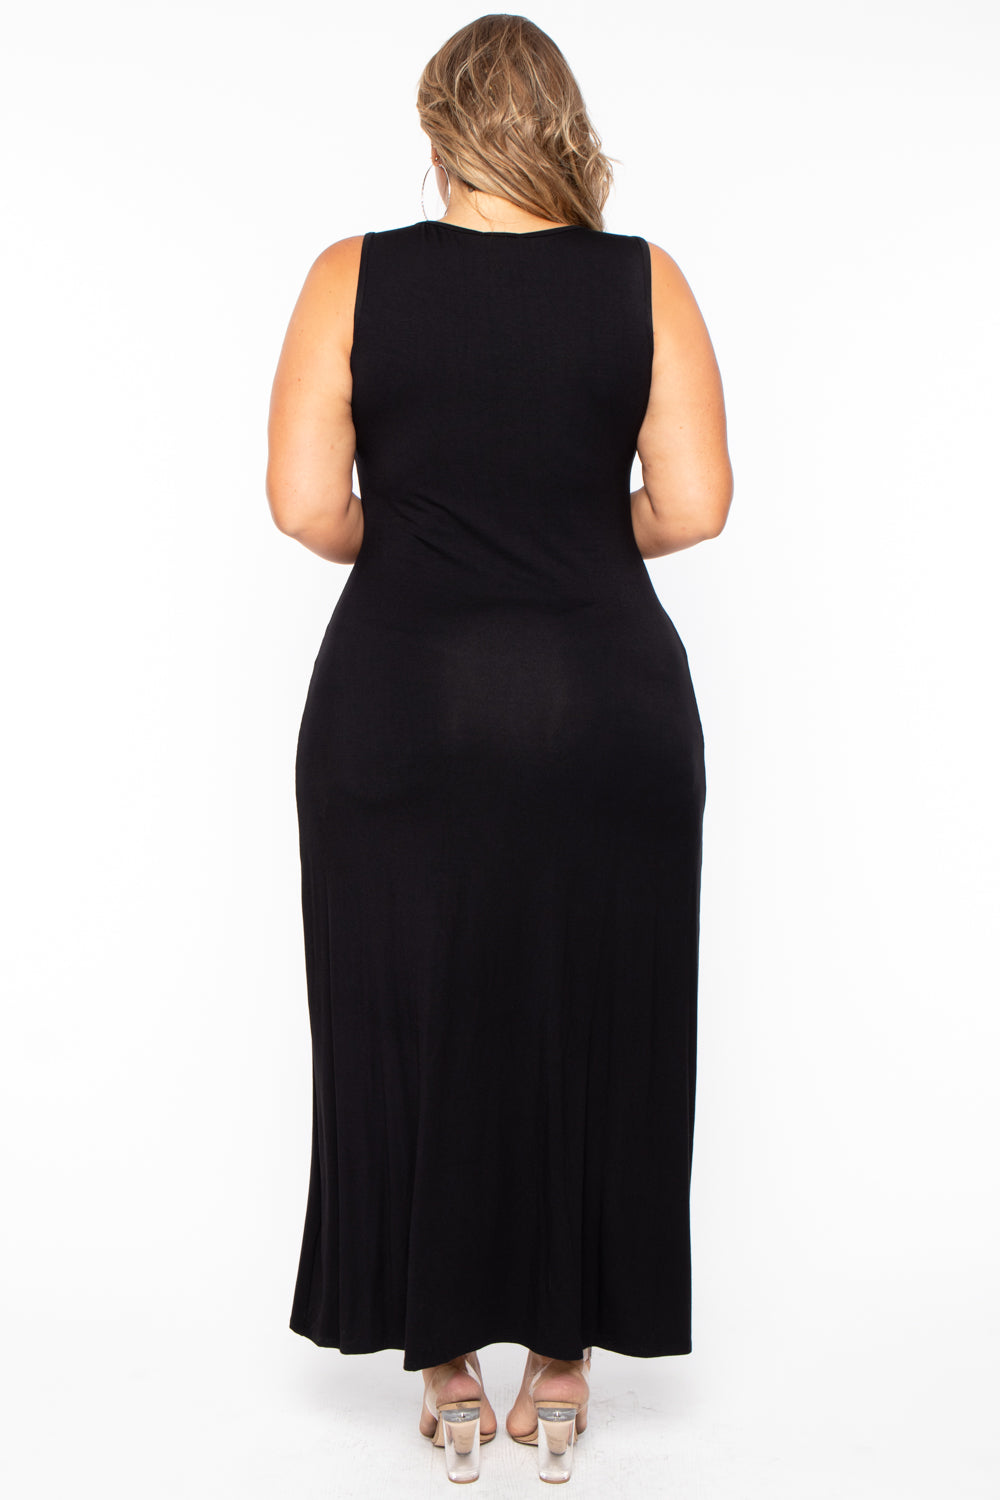 Plus Size Melly M-Slit Dress - Black - Curvy Sense